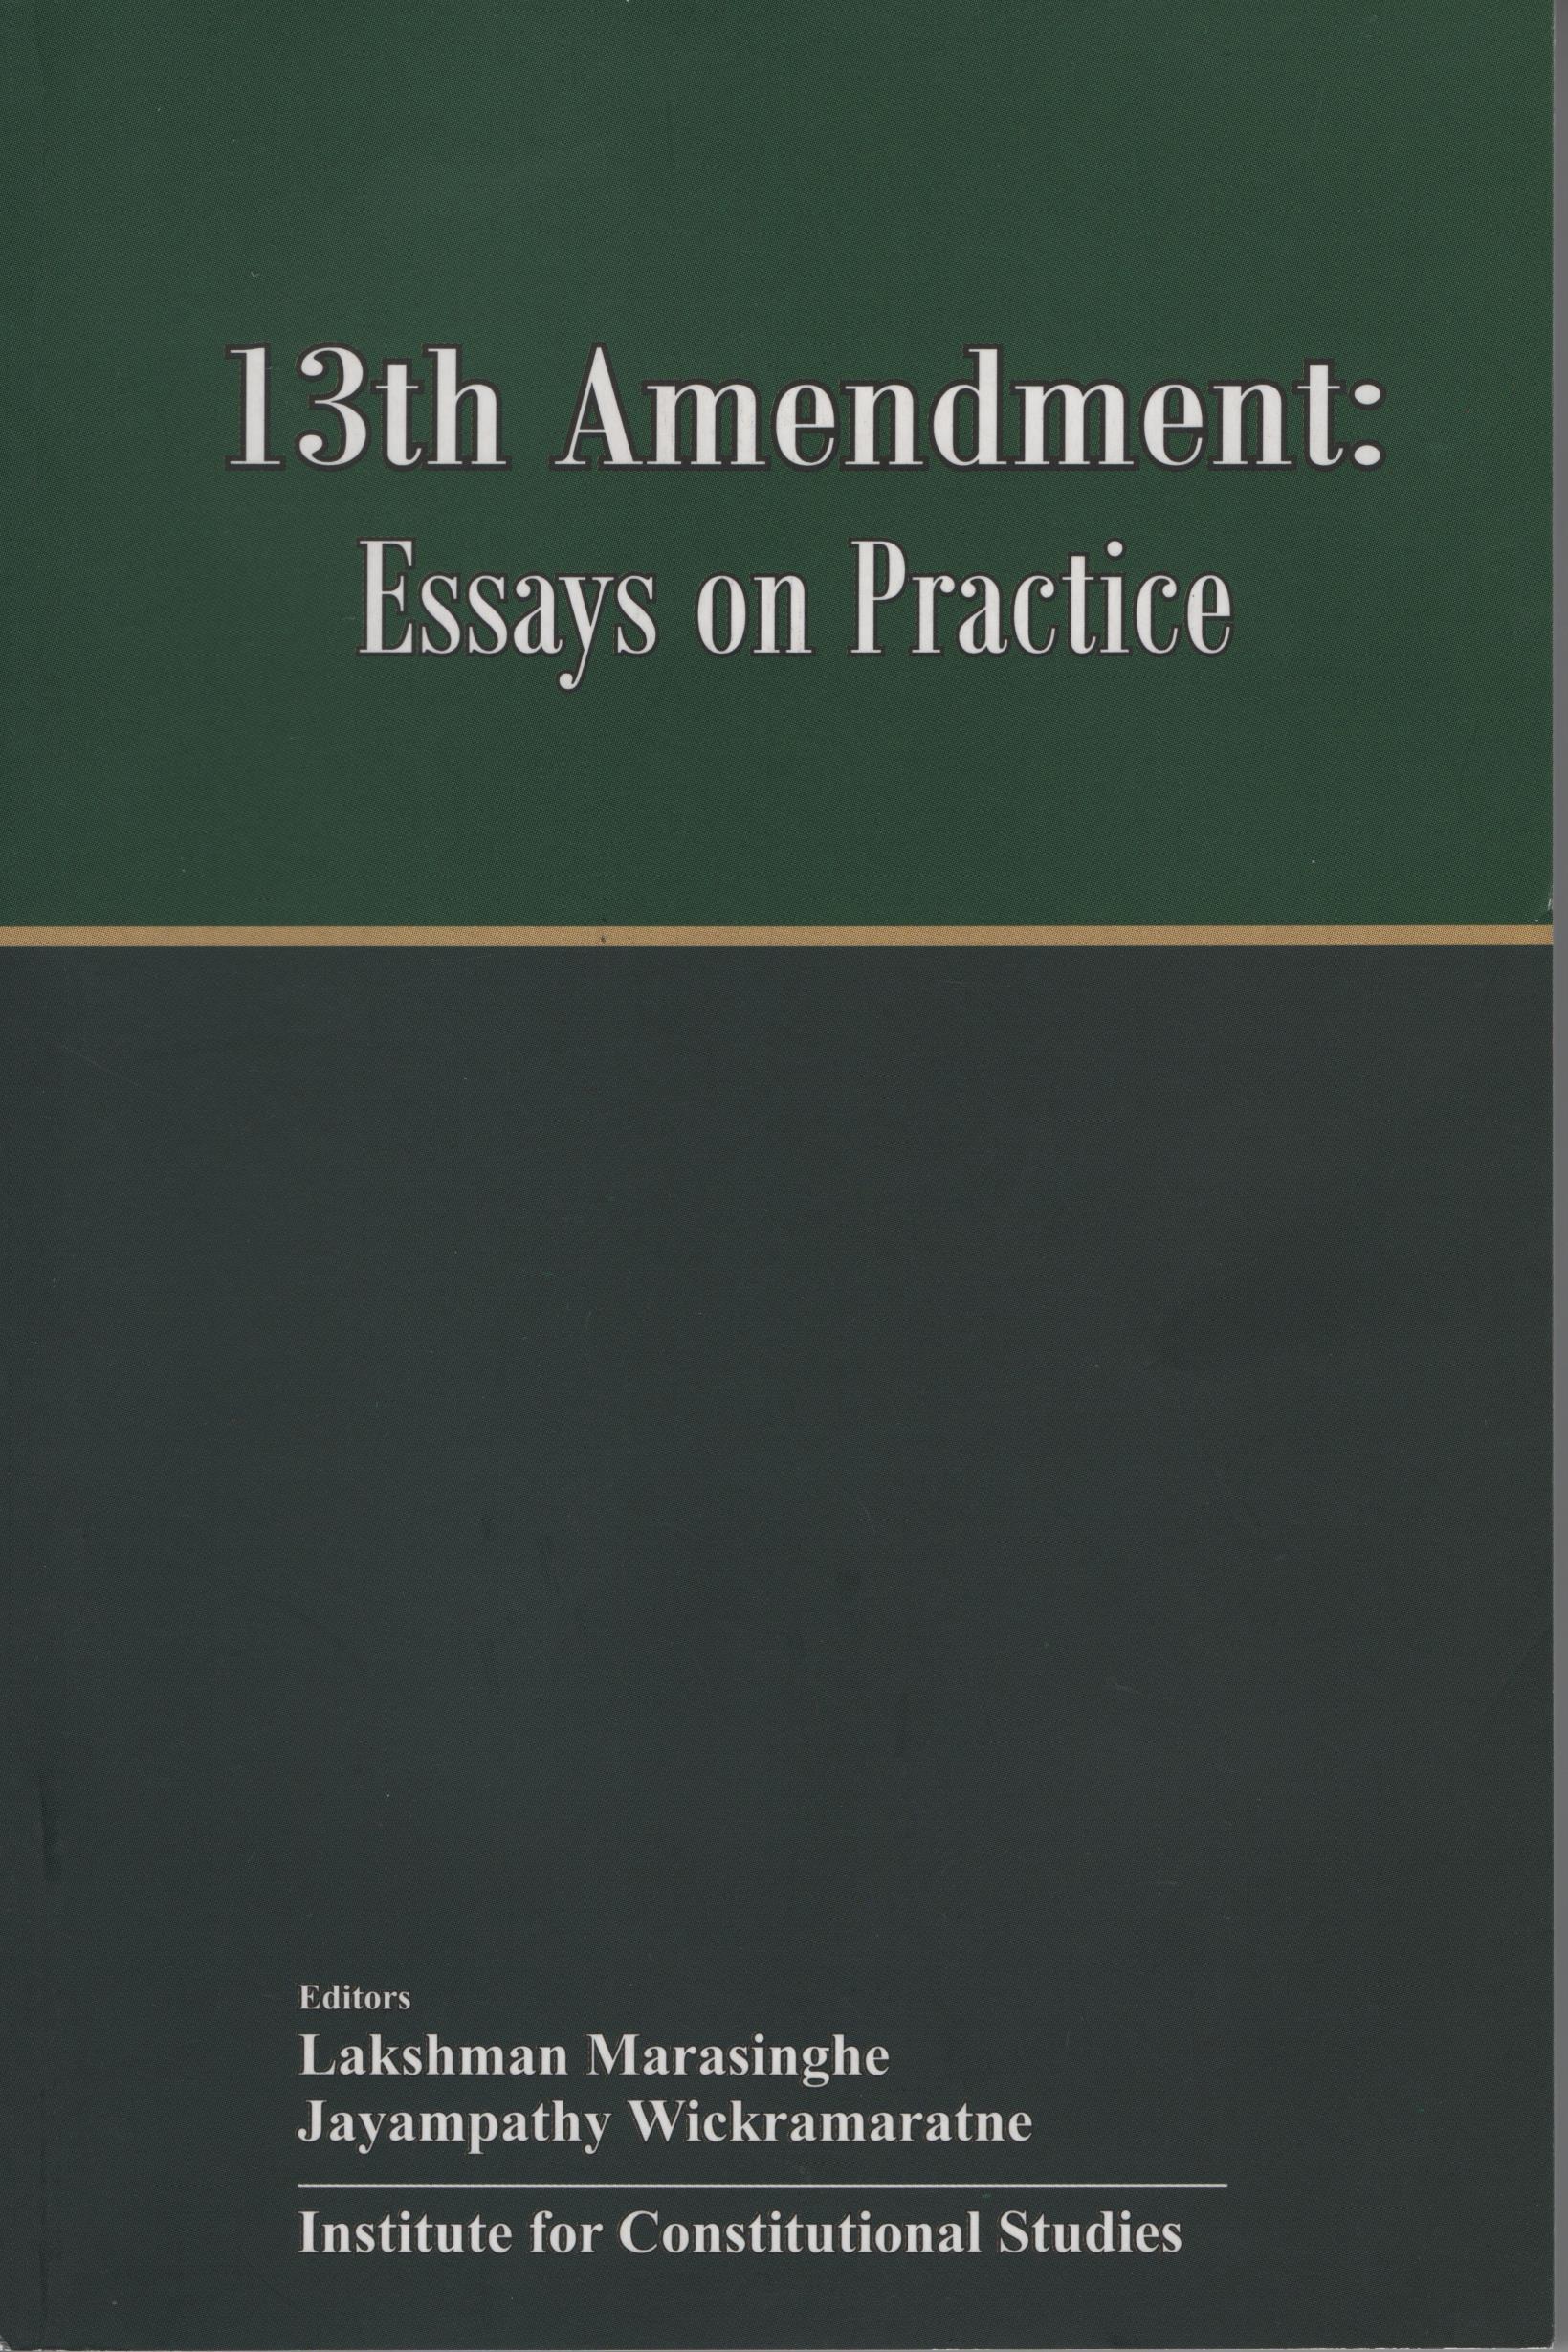 13th Amendment: Essays on Practice